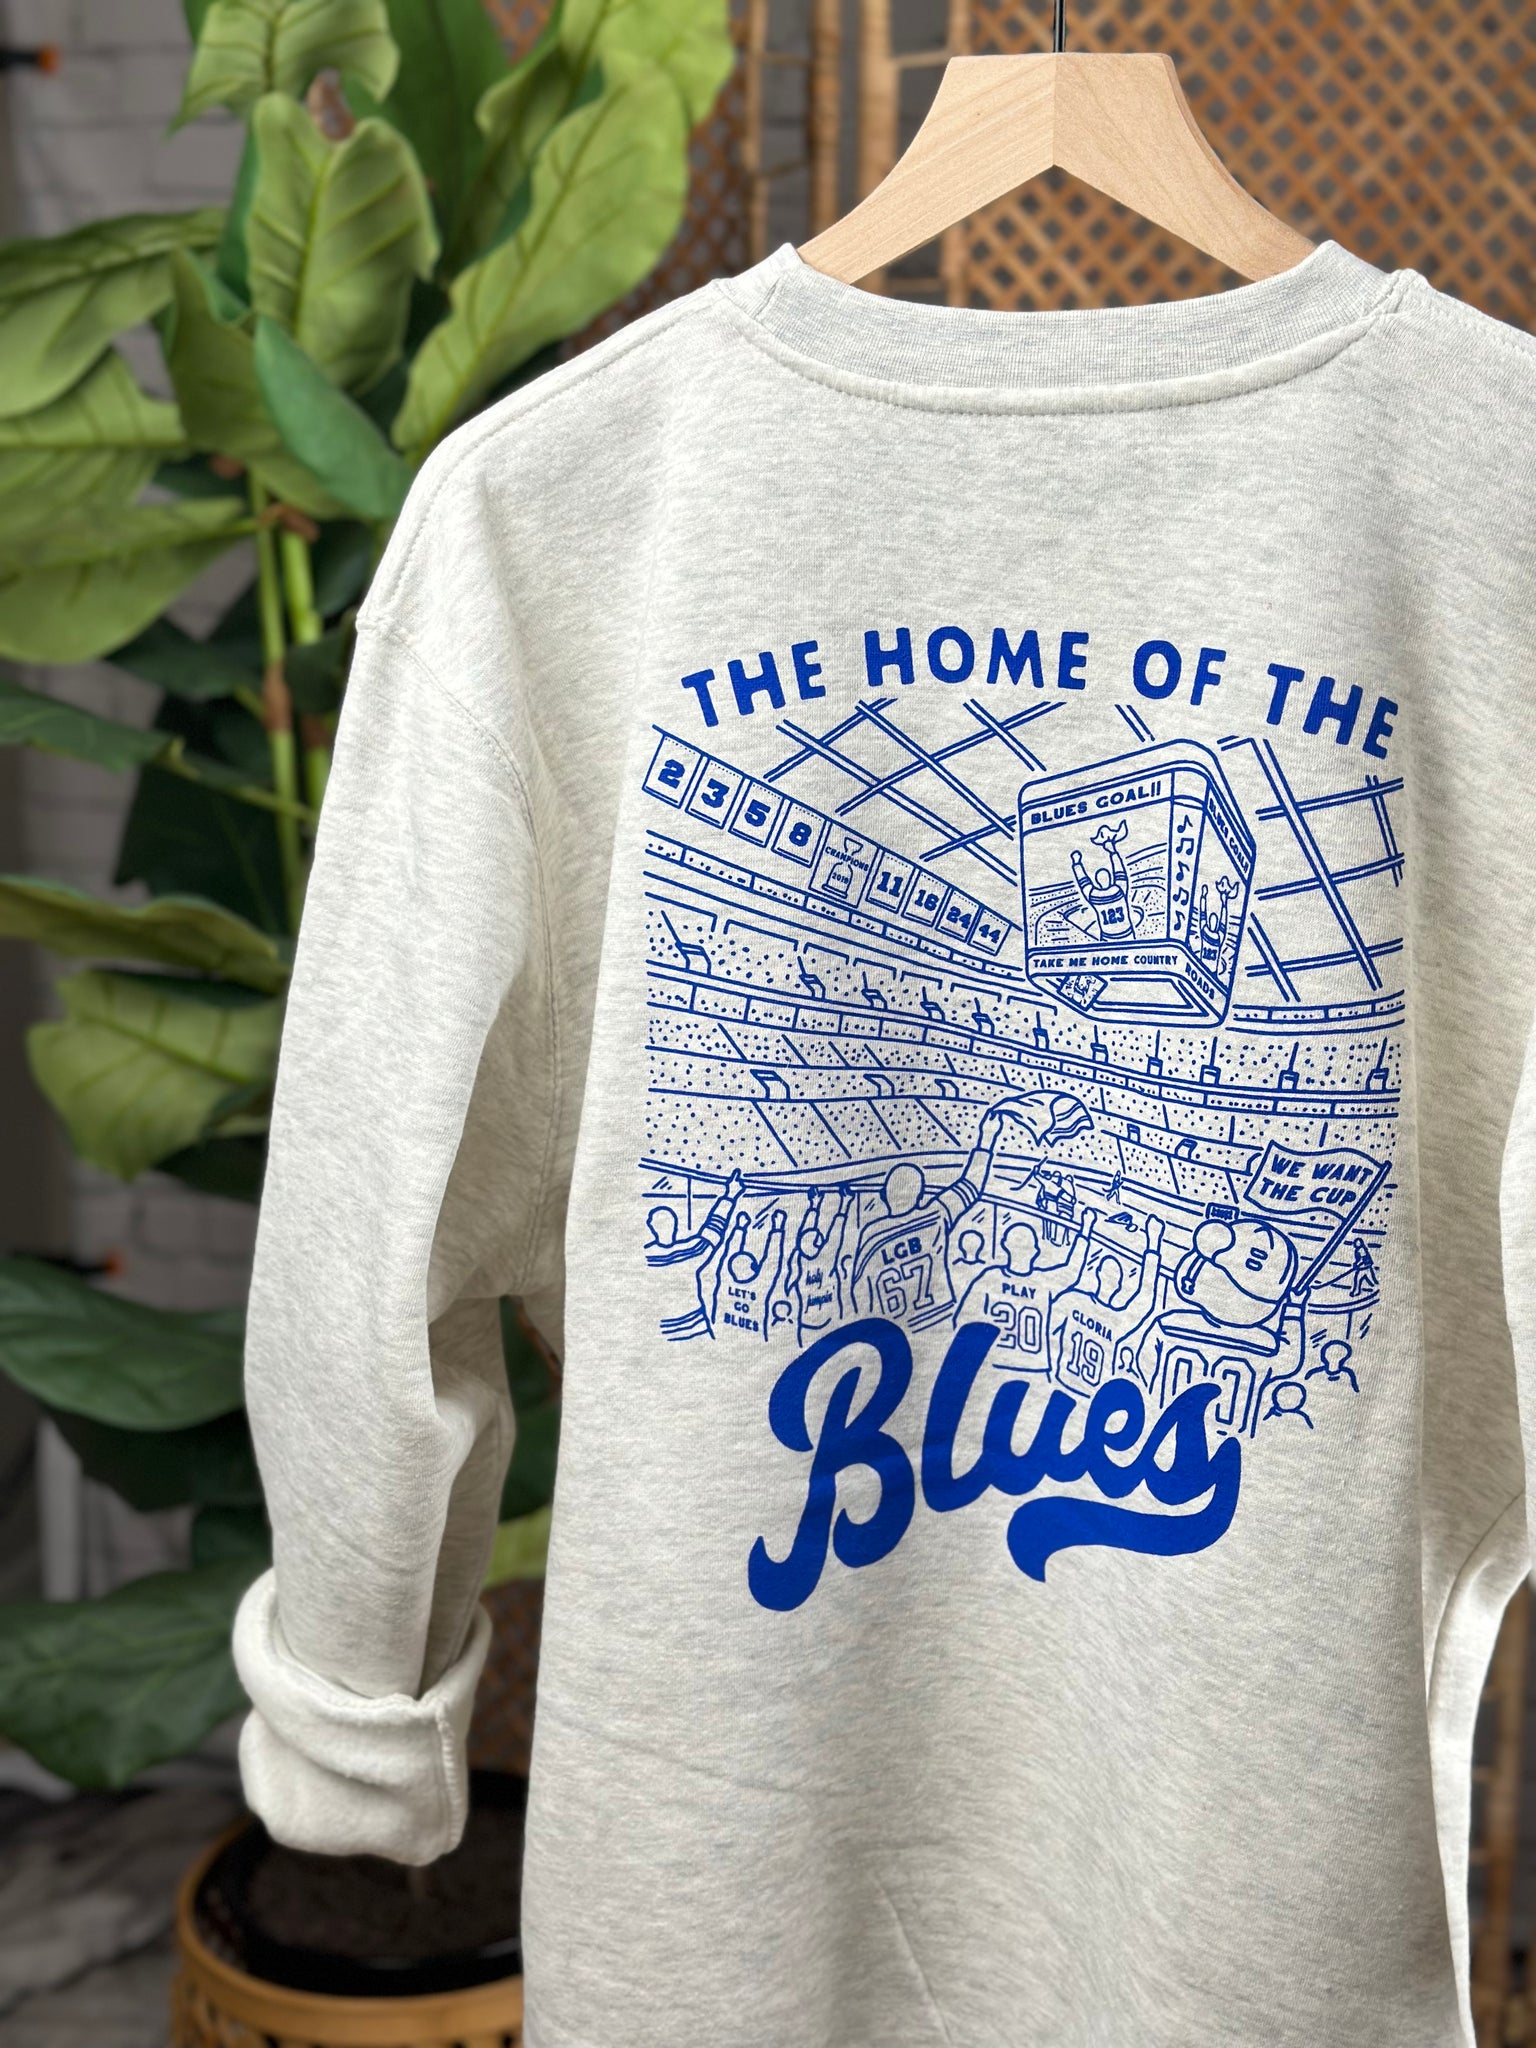 Play Gloria! St. Louis blues hockey' Unisex Baseball T-Shirt